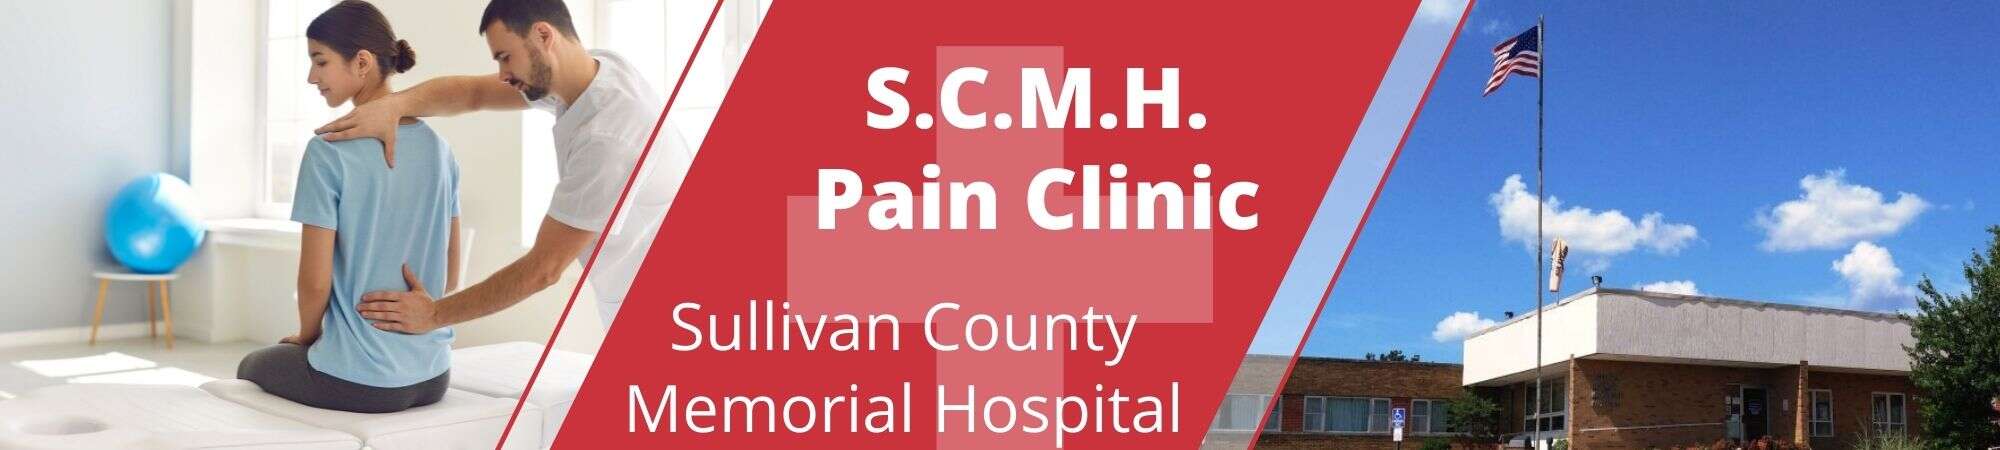 SCMH Pain Clinic